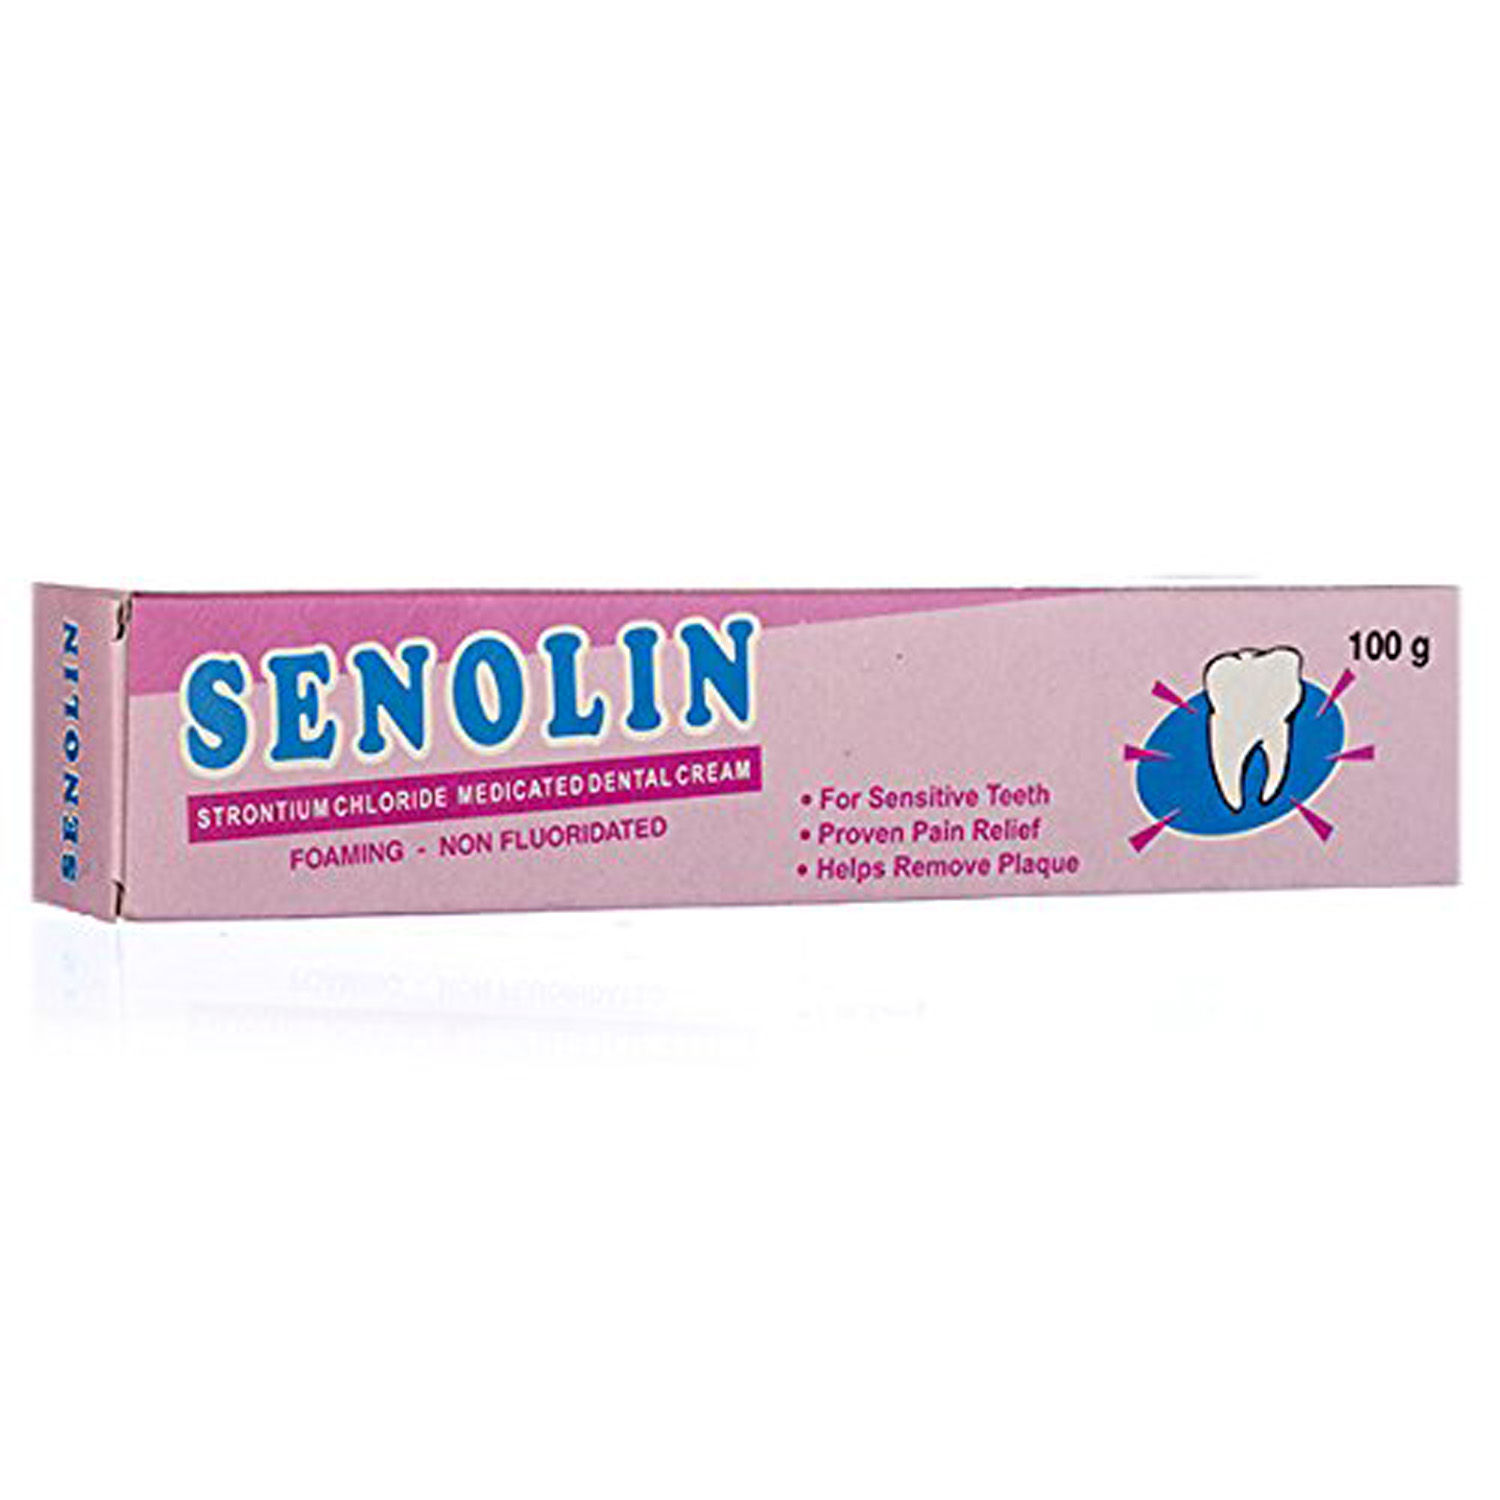 Buy Senolin Toothpaste, 100 gm Online